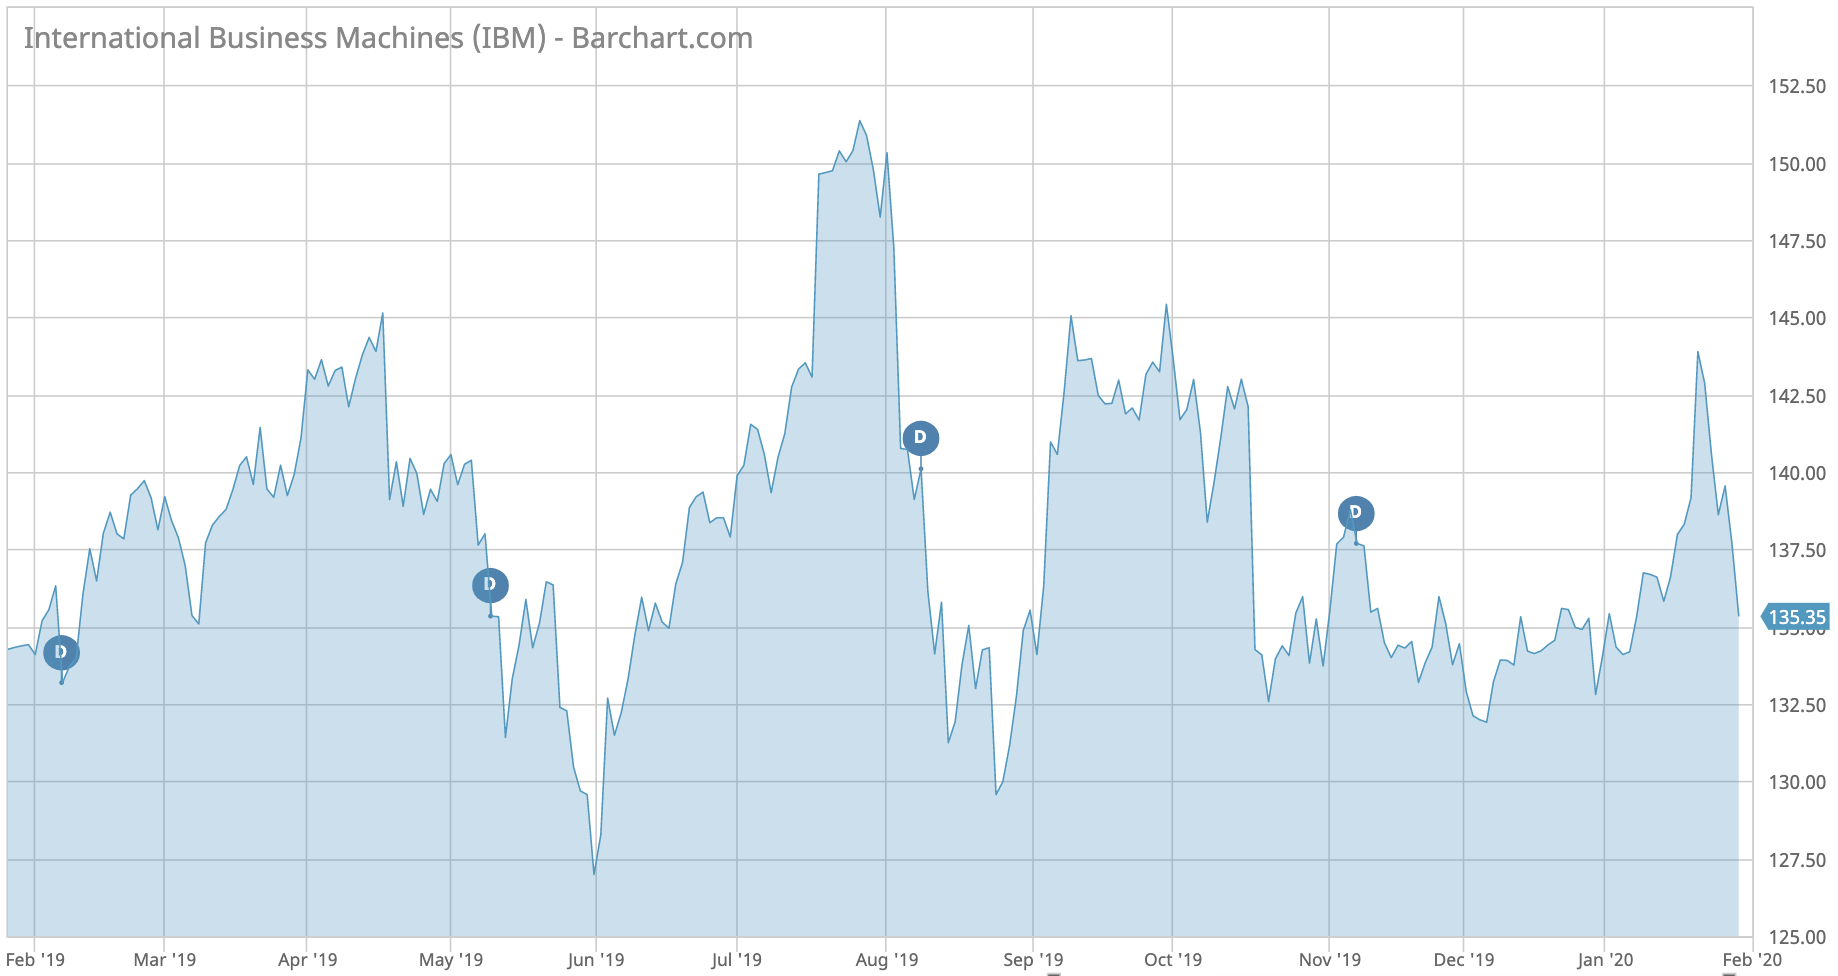 IBM stock price performance